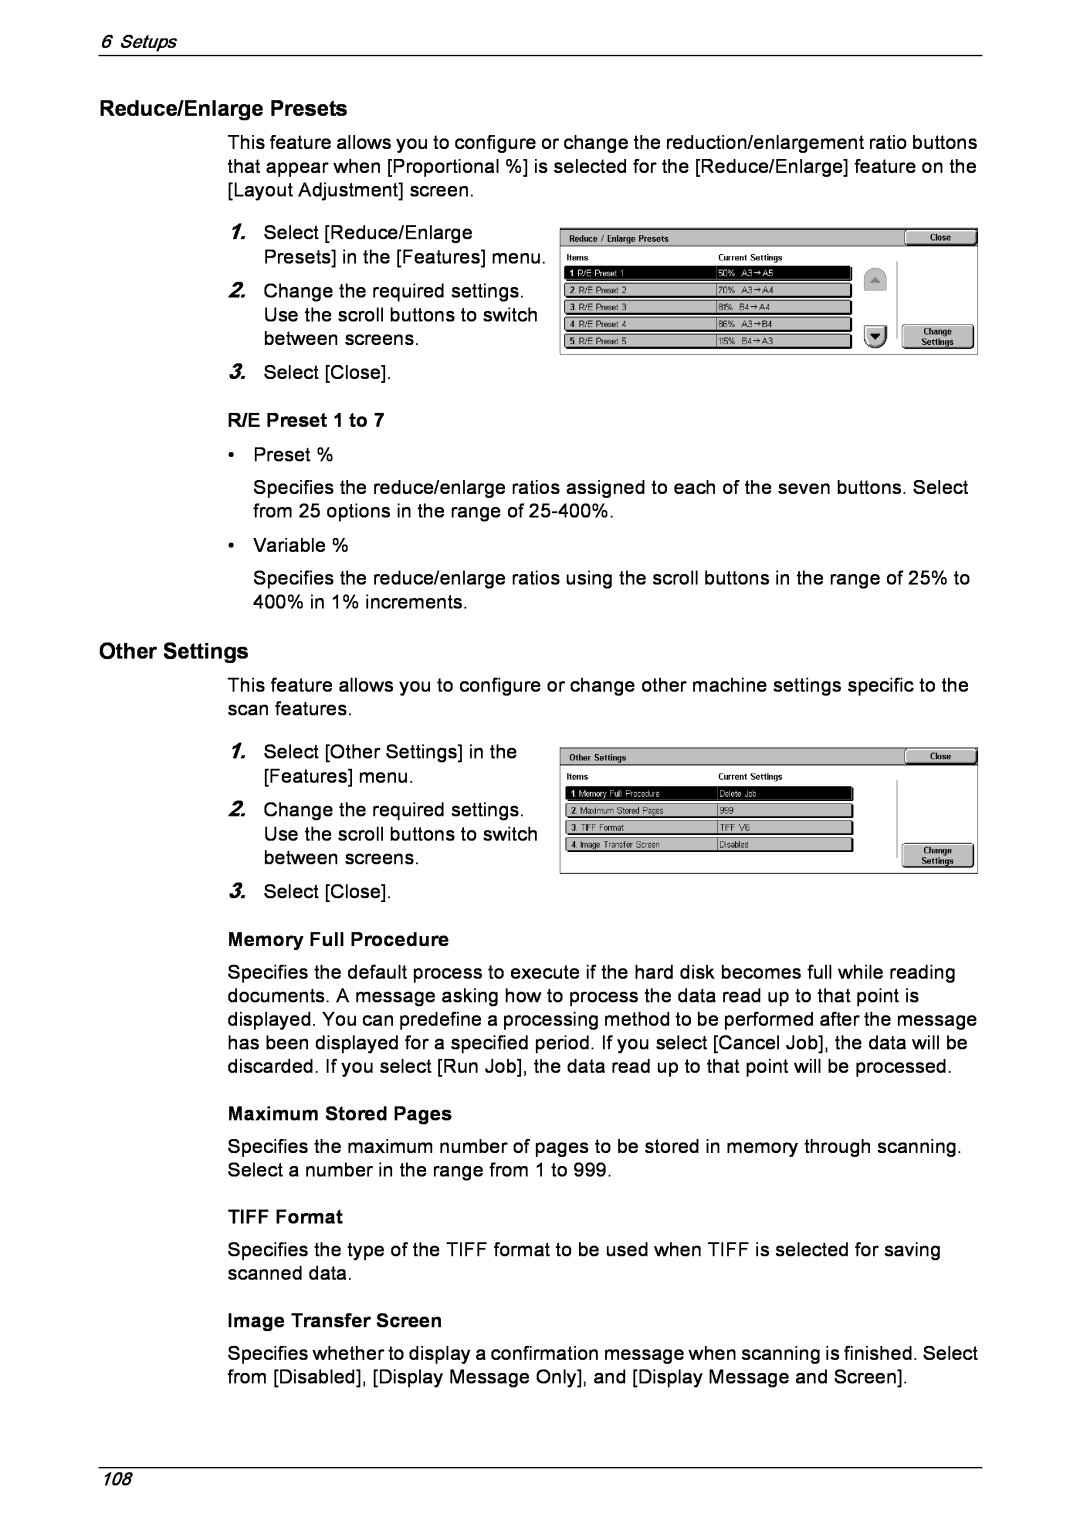 Xerox 5222 manual R/E Preset 1 to, Memory Full Procedure, Maximum Stored Pages, TIFF Format, Image Transfer Screen 